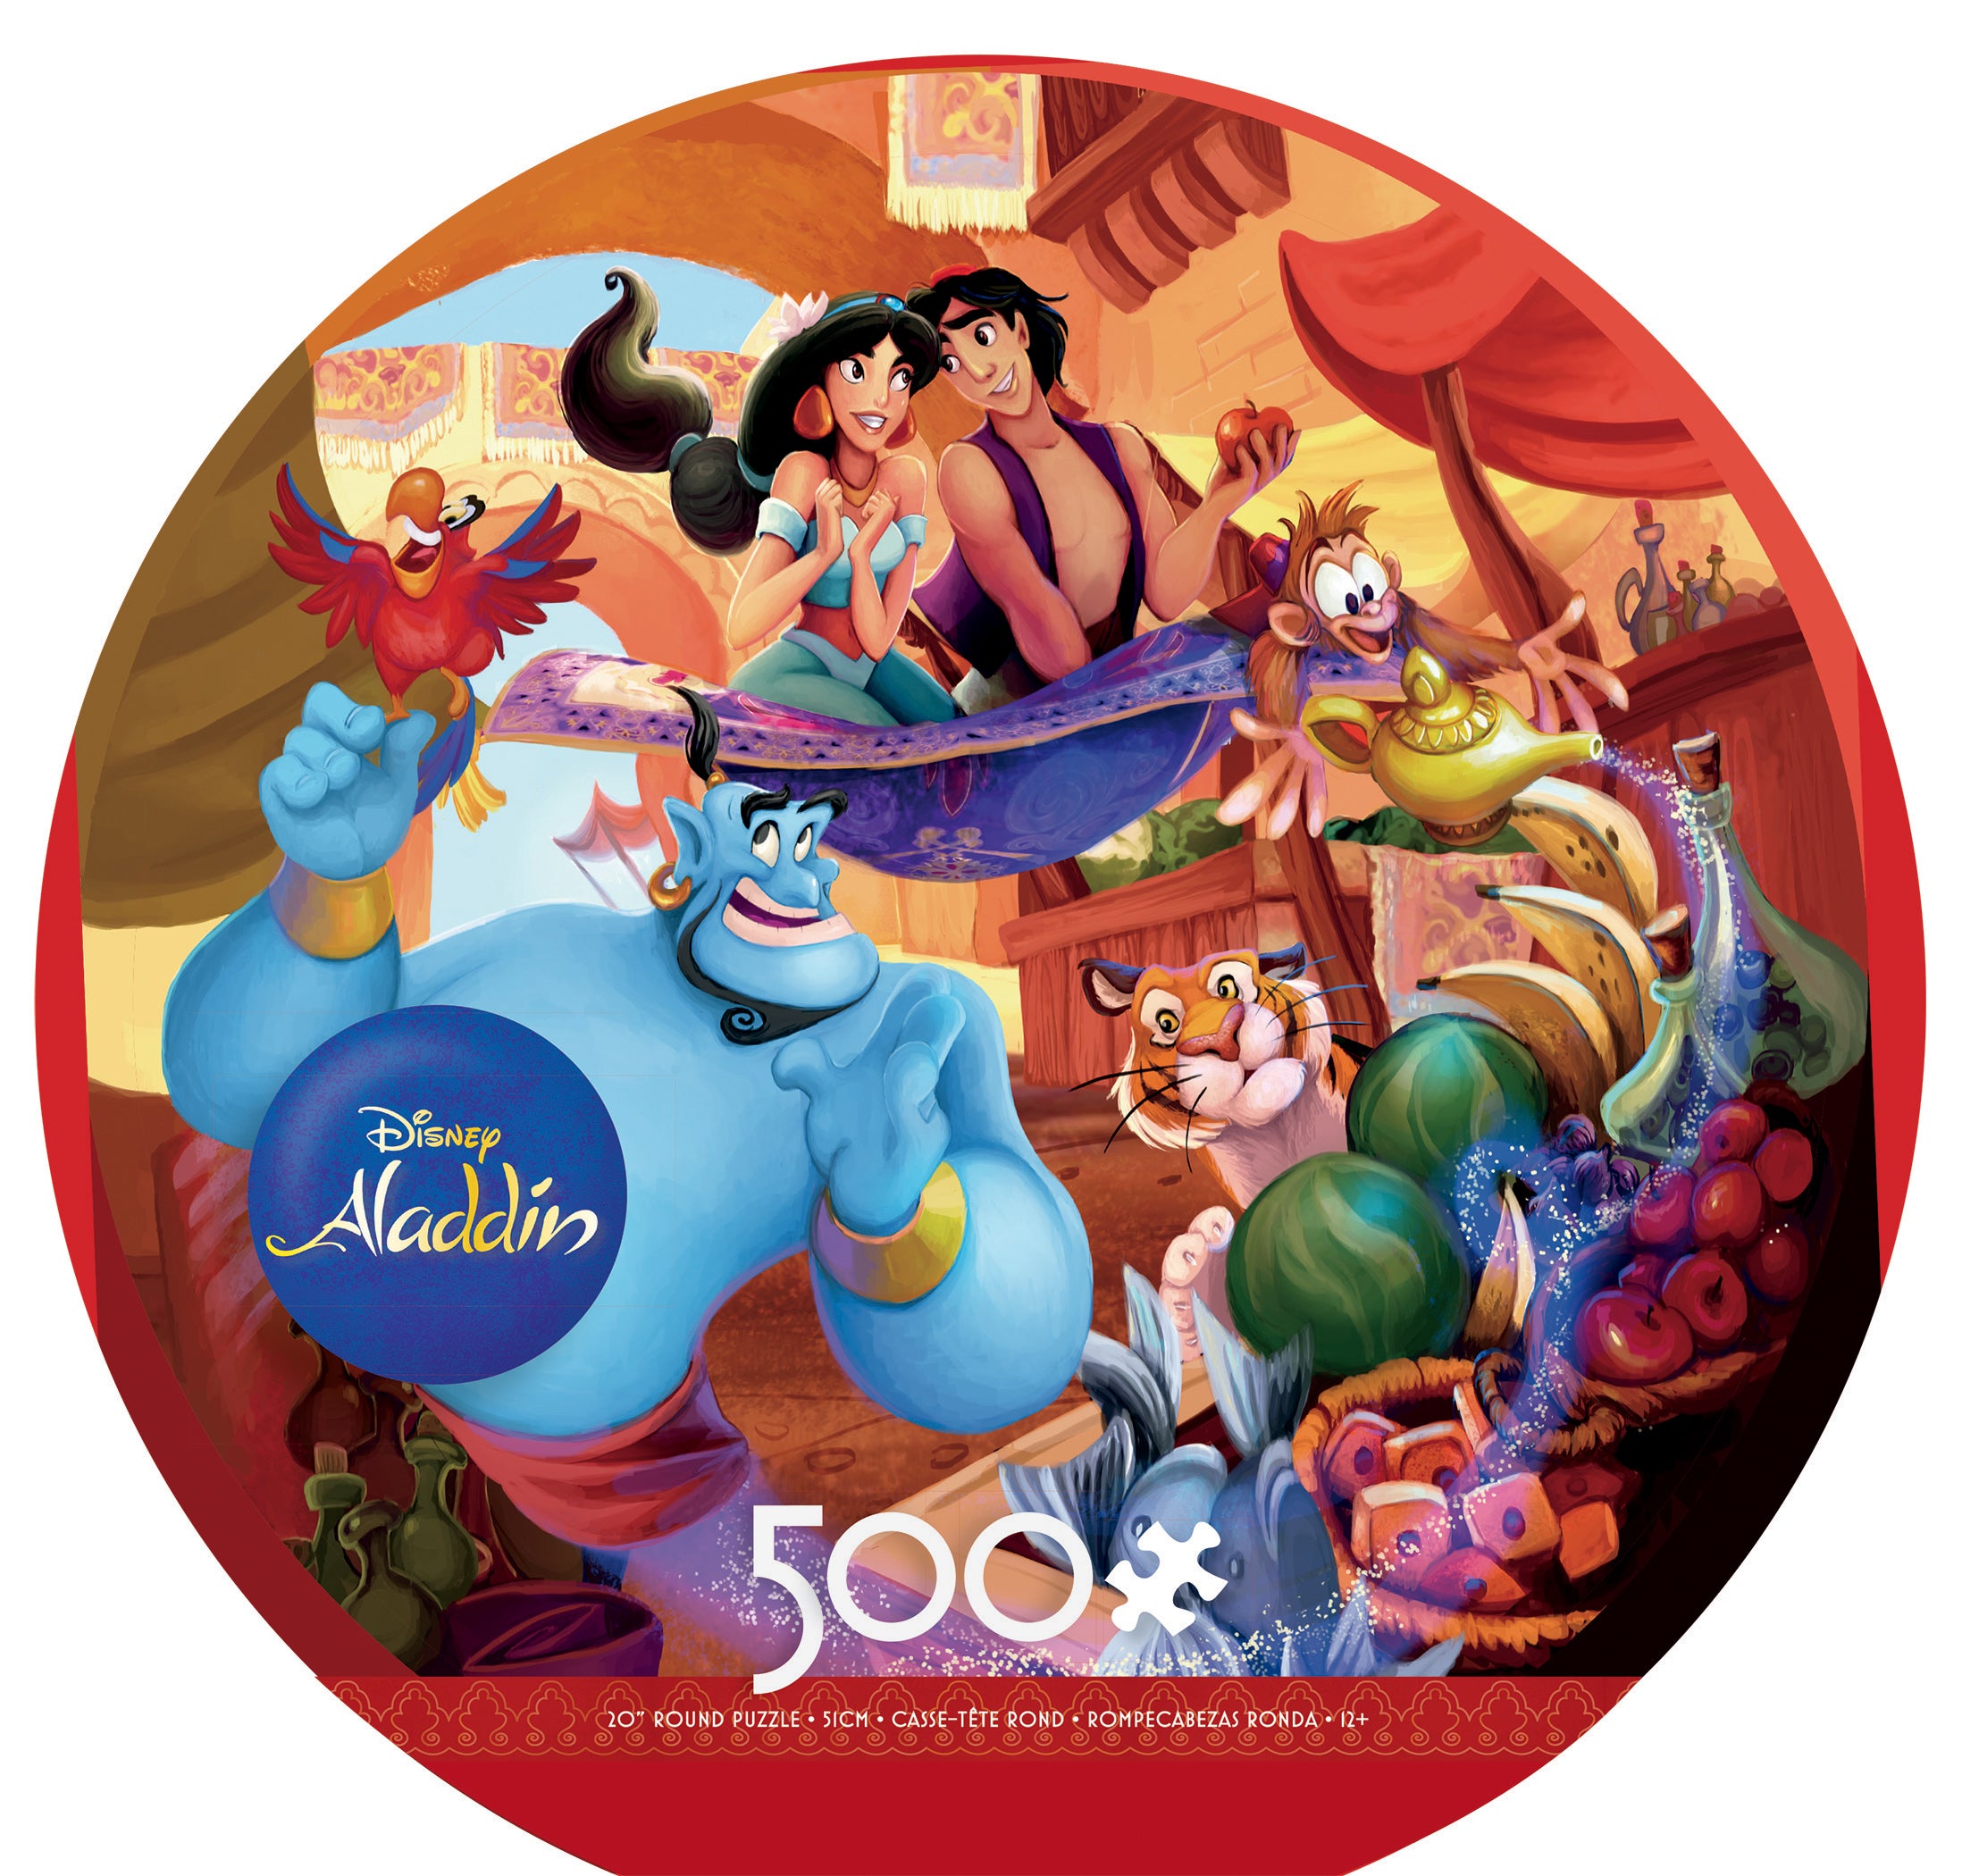 Aladdin (500 pc circular puzzle)